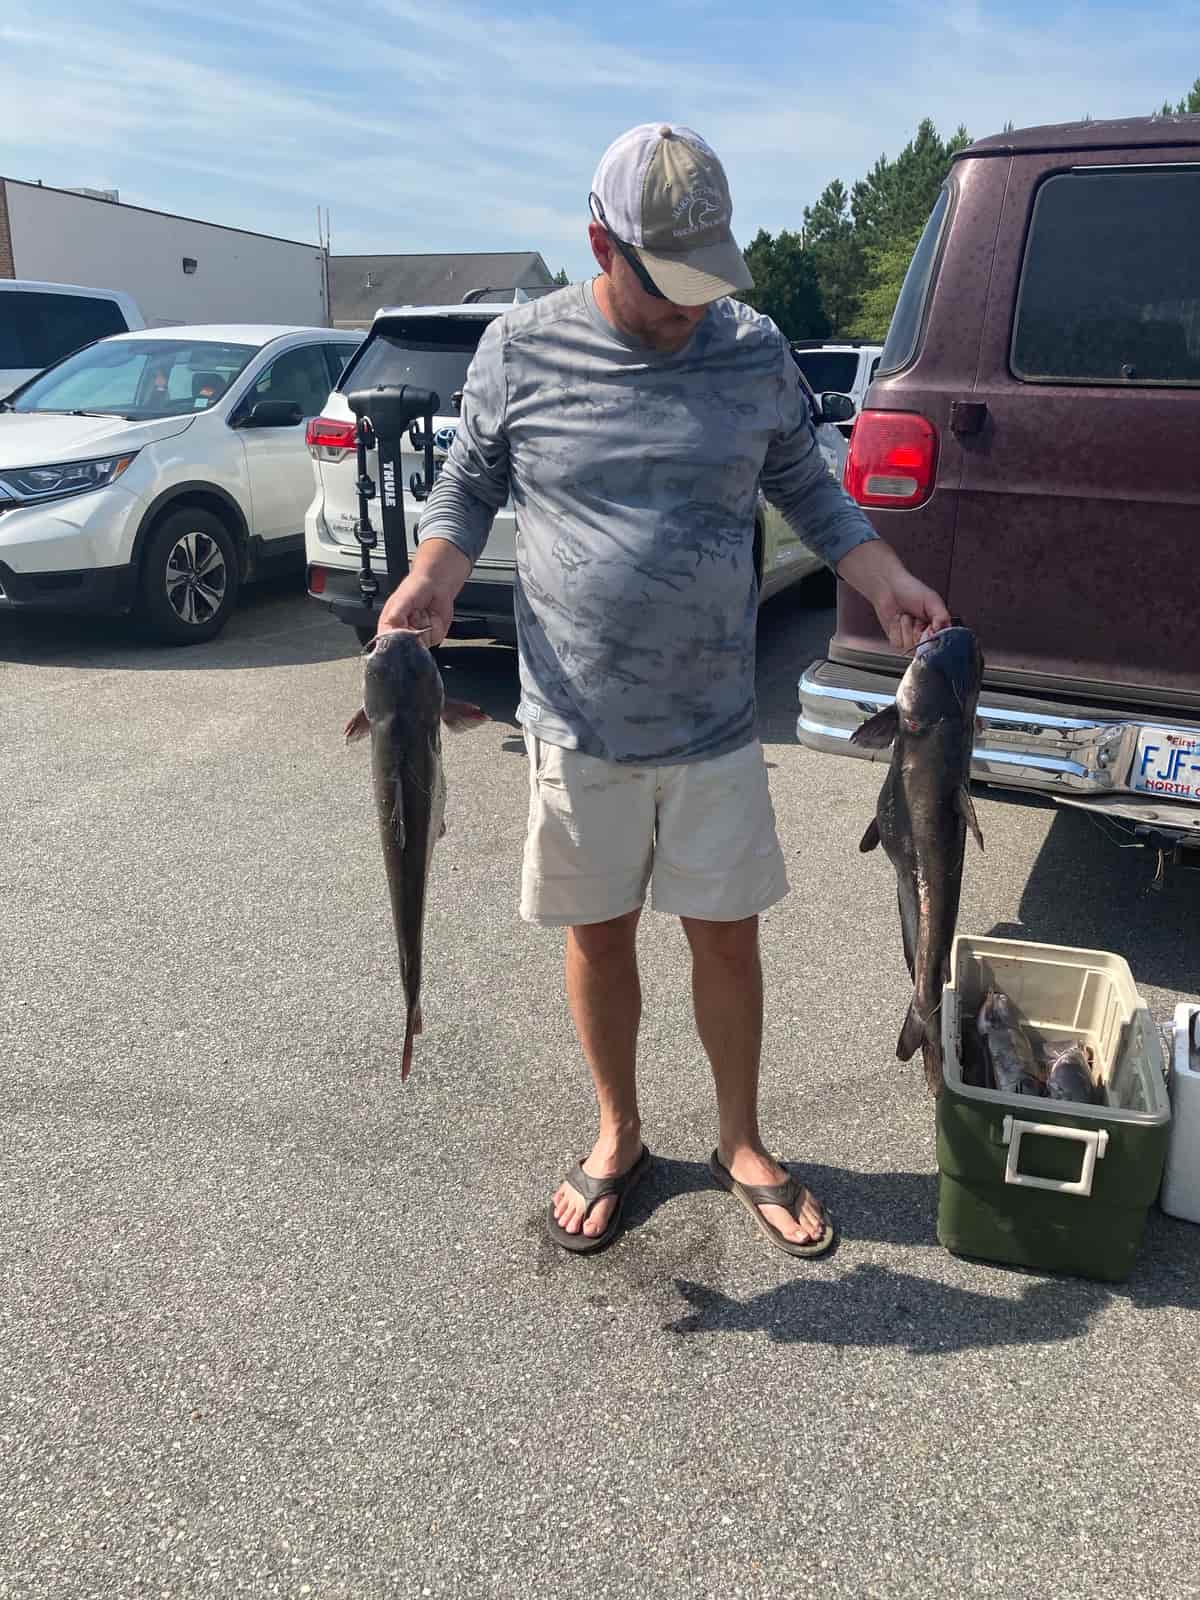 Catfish cought on Cape Fear River near Lillington, NC